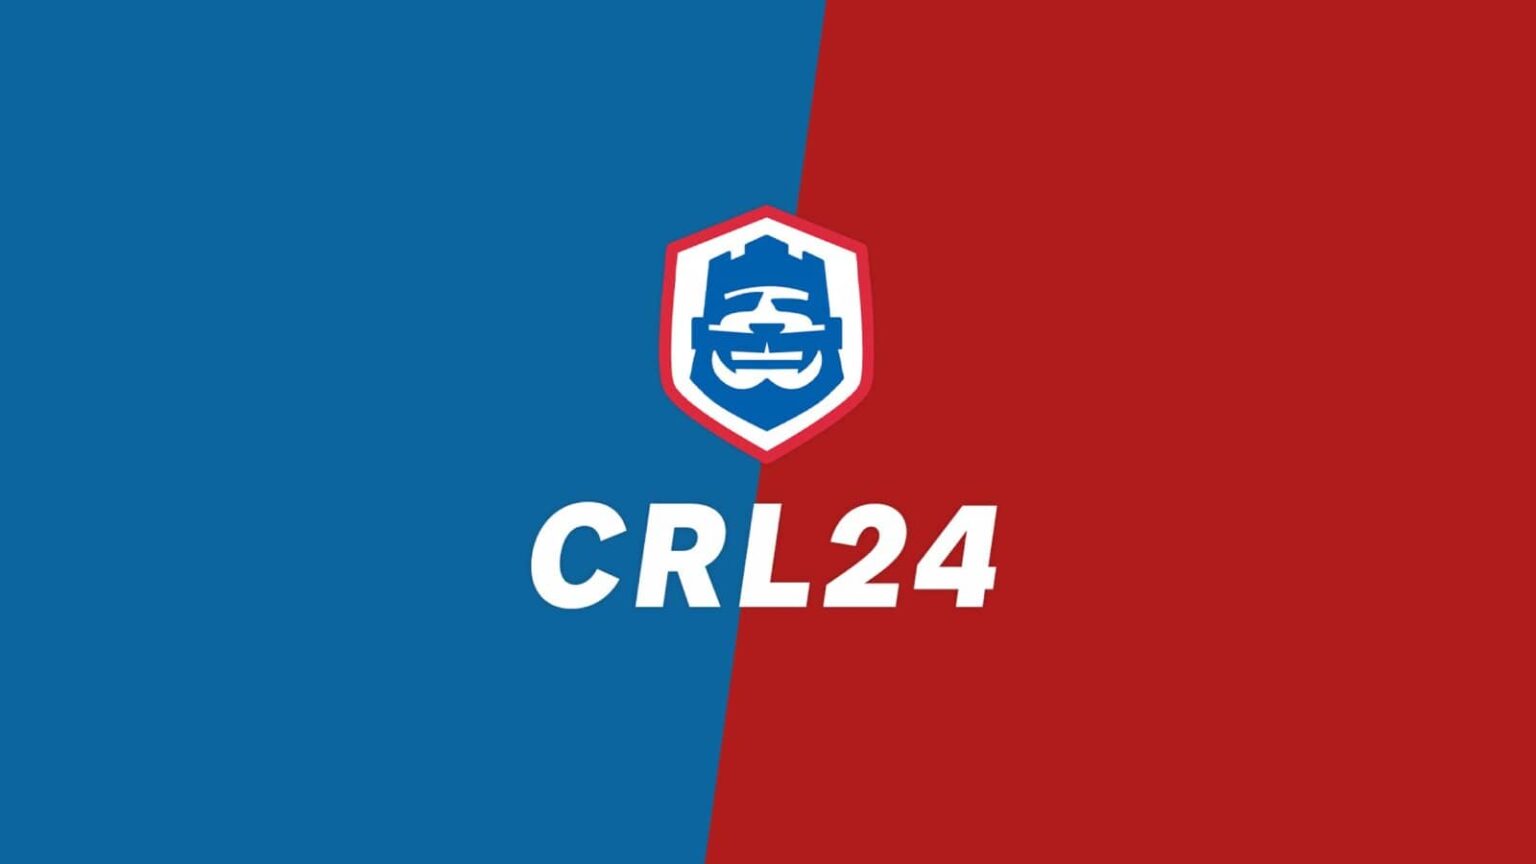 CRL 2024 Esports event logo